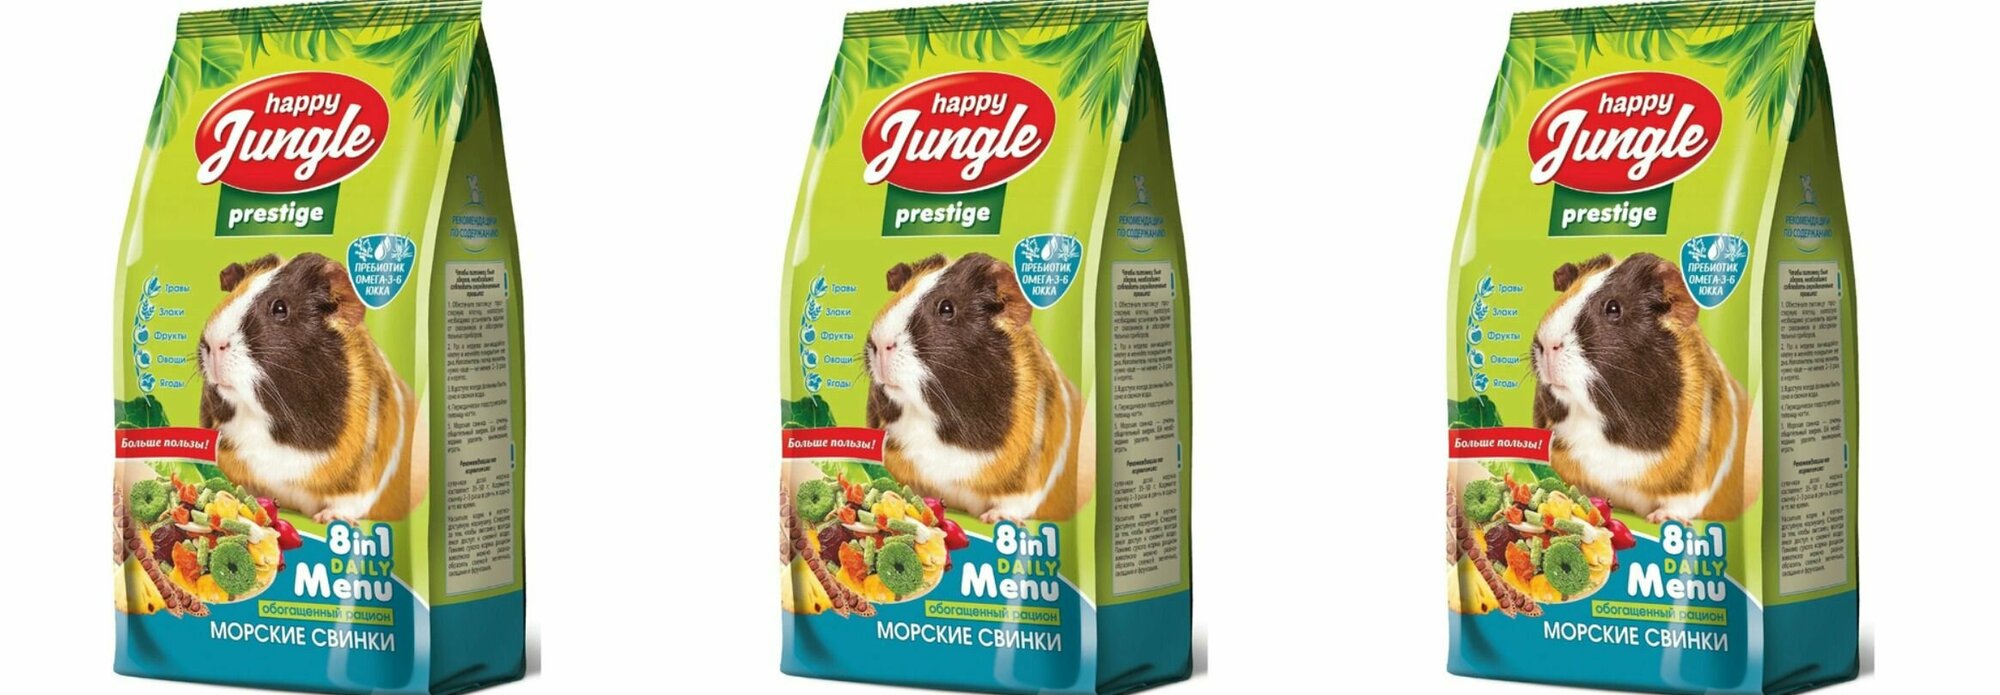 Happy Jungle Корм для морских свинок Prestige, 500 г, 3 шт